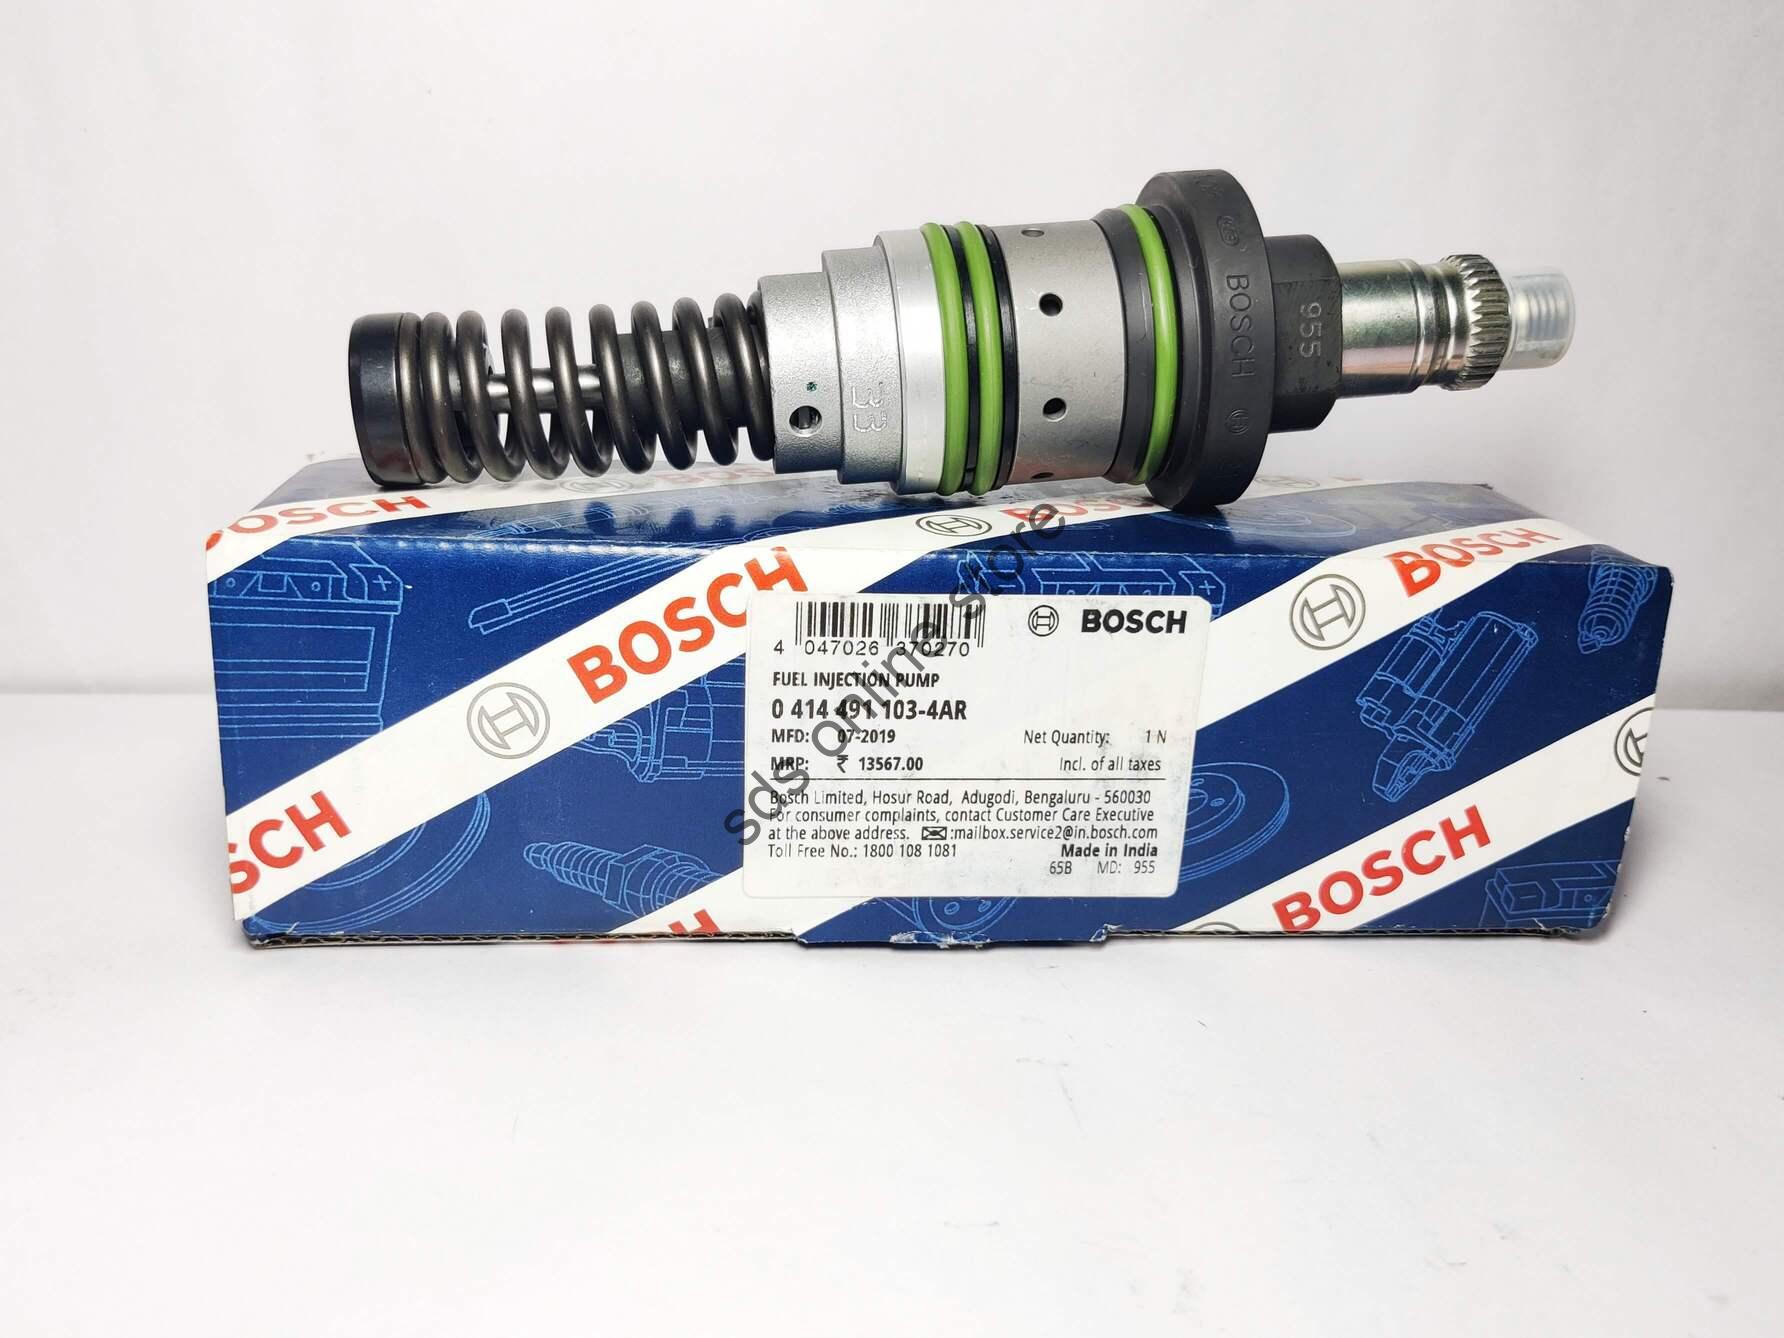 Bosch Fuel Injection Pump 0414491103-4AR with Original Box